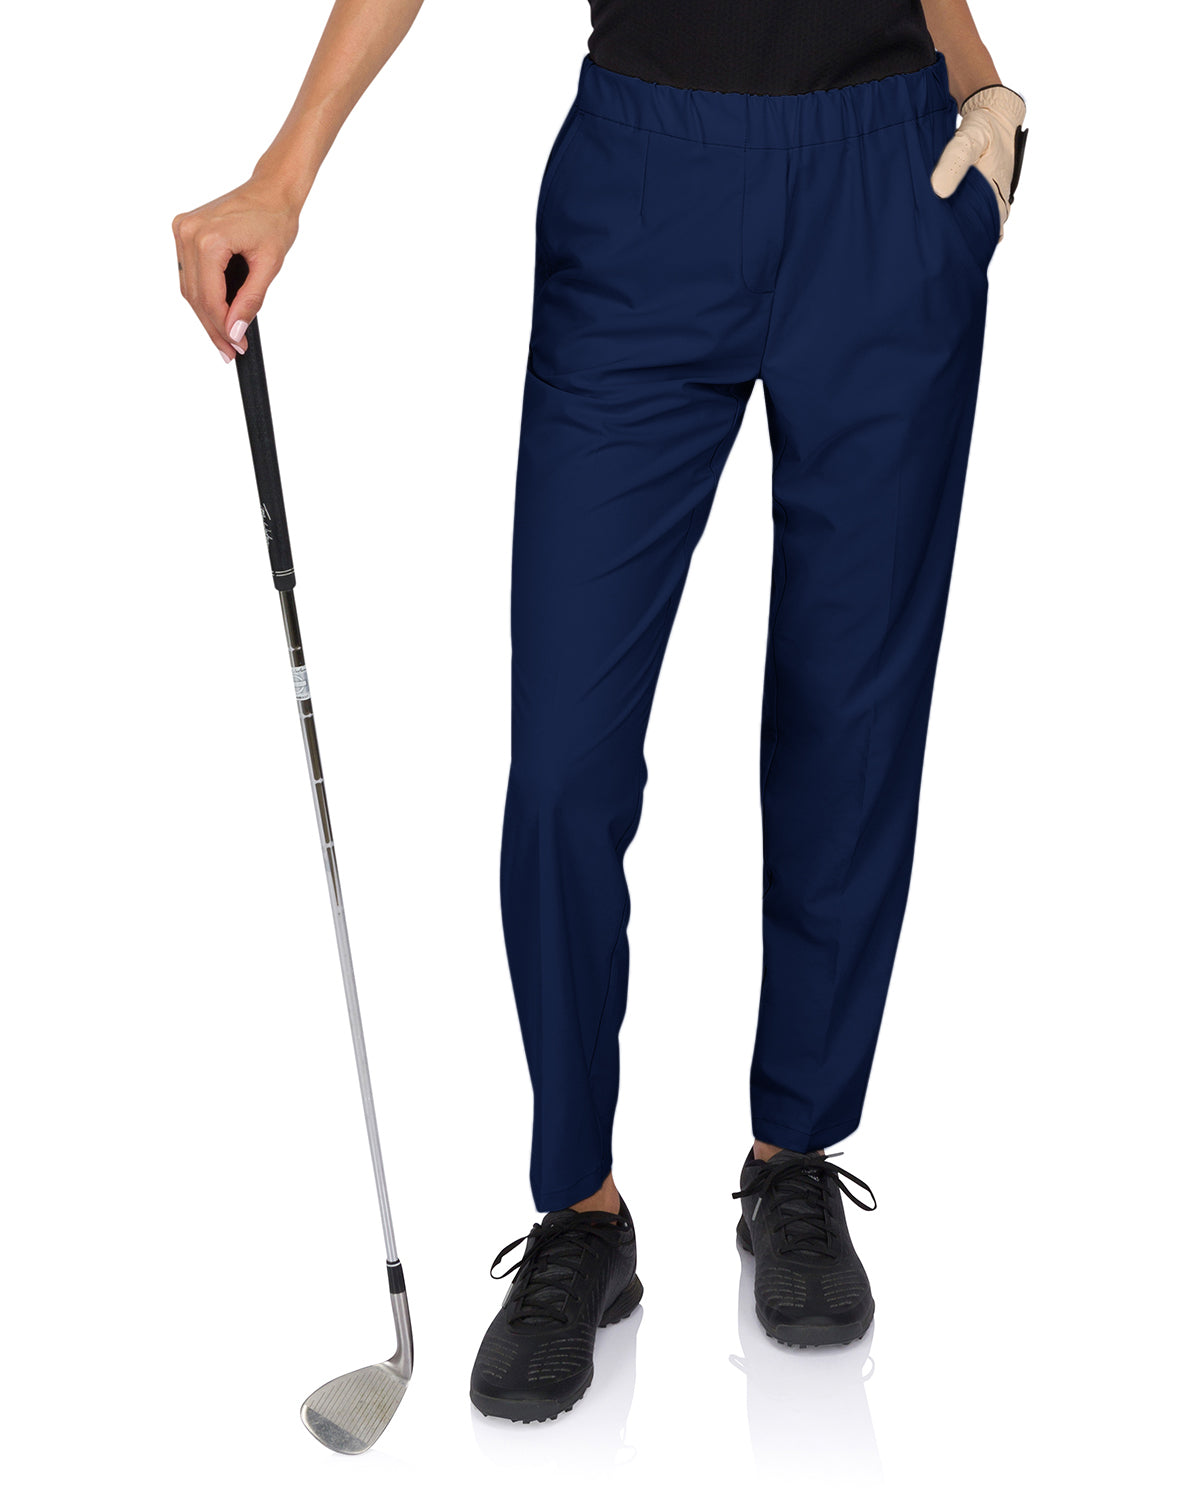 Three Sixty Six Women's Golf Pants - Elastic Waistband, Breathable and